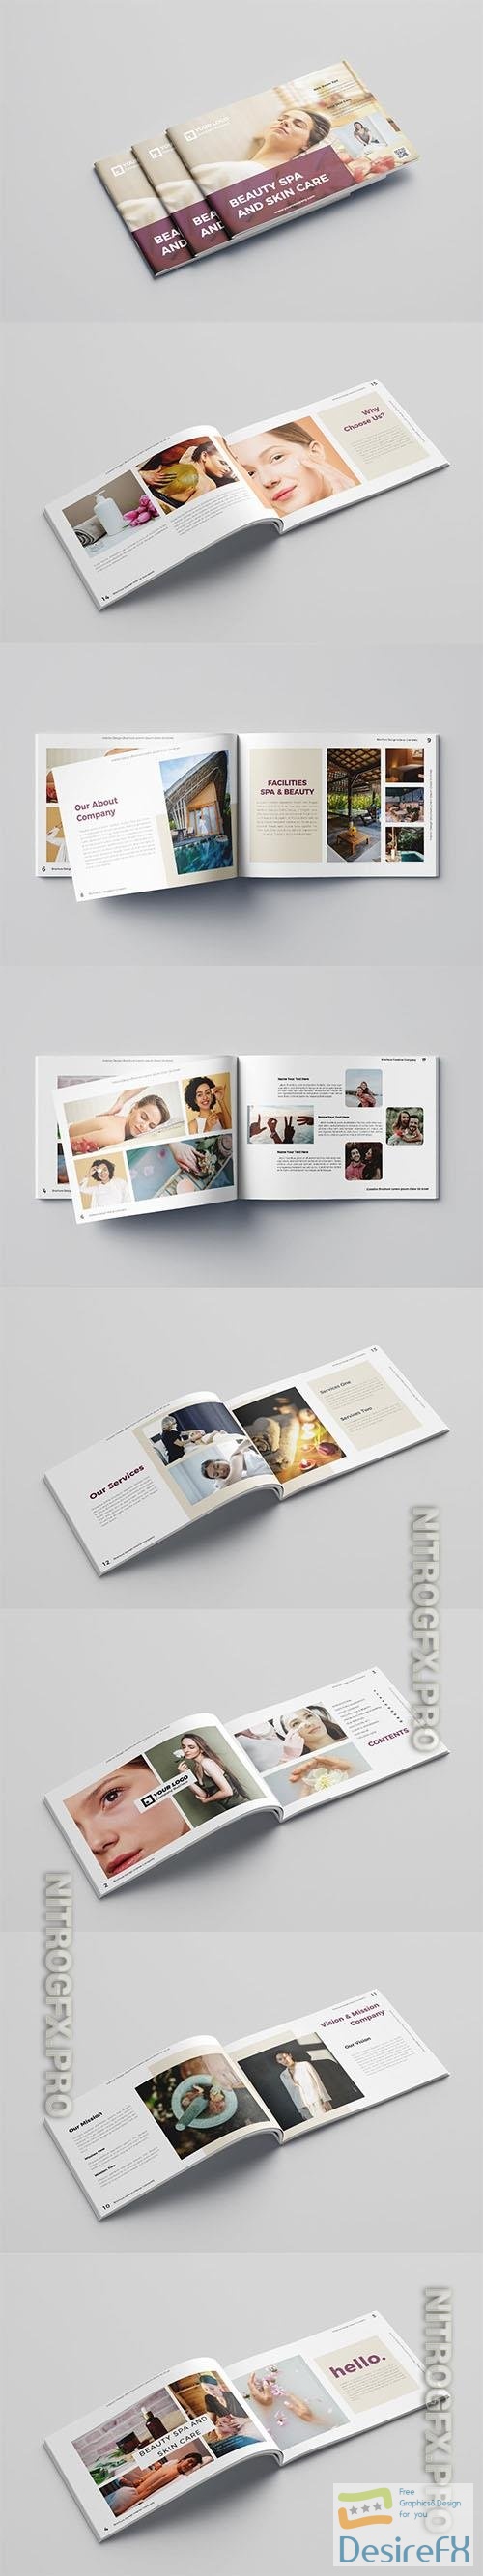 Spa and Beauty Brochure Vol.1